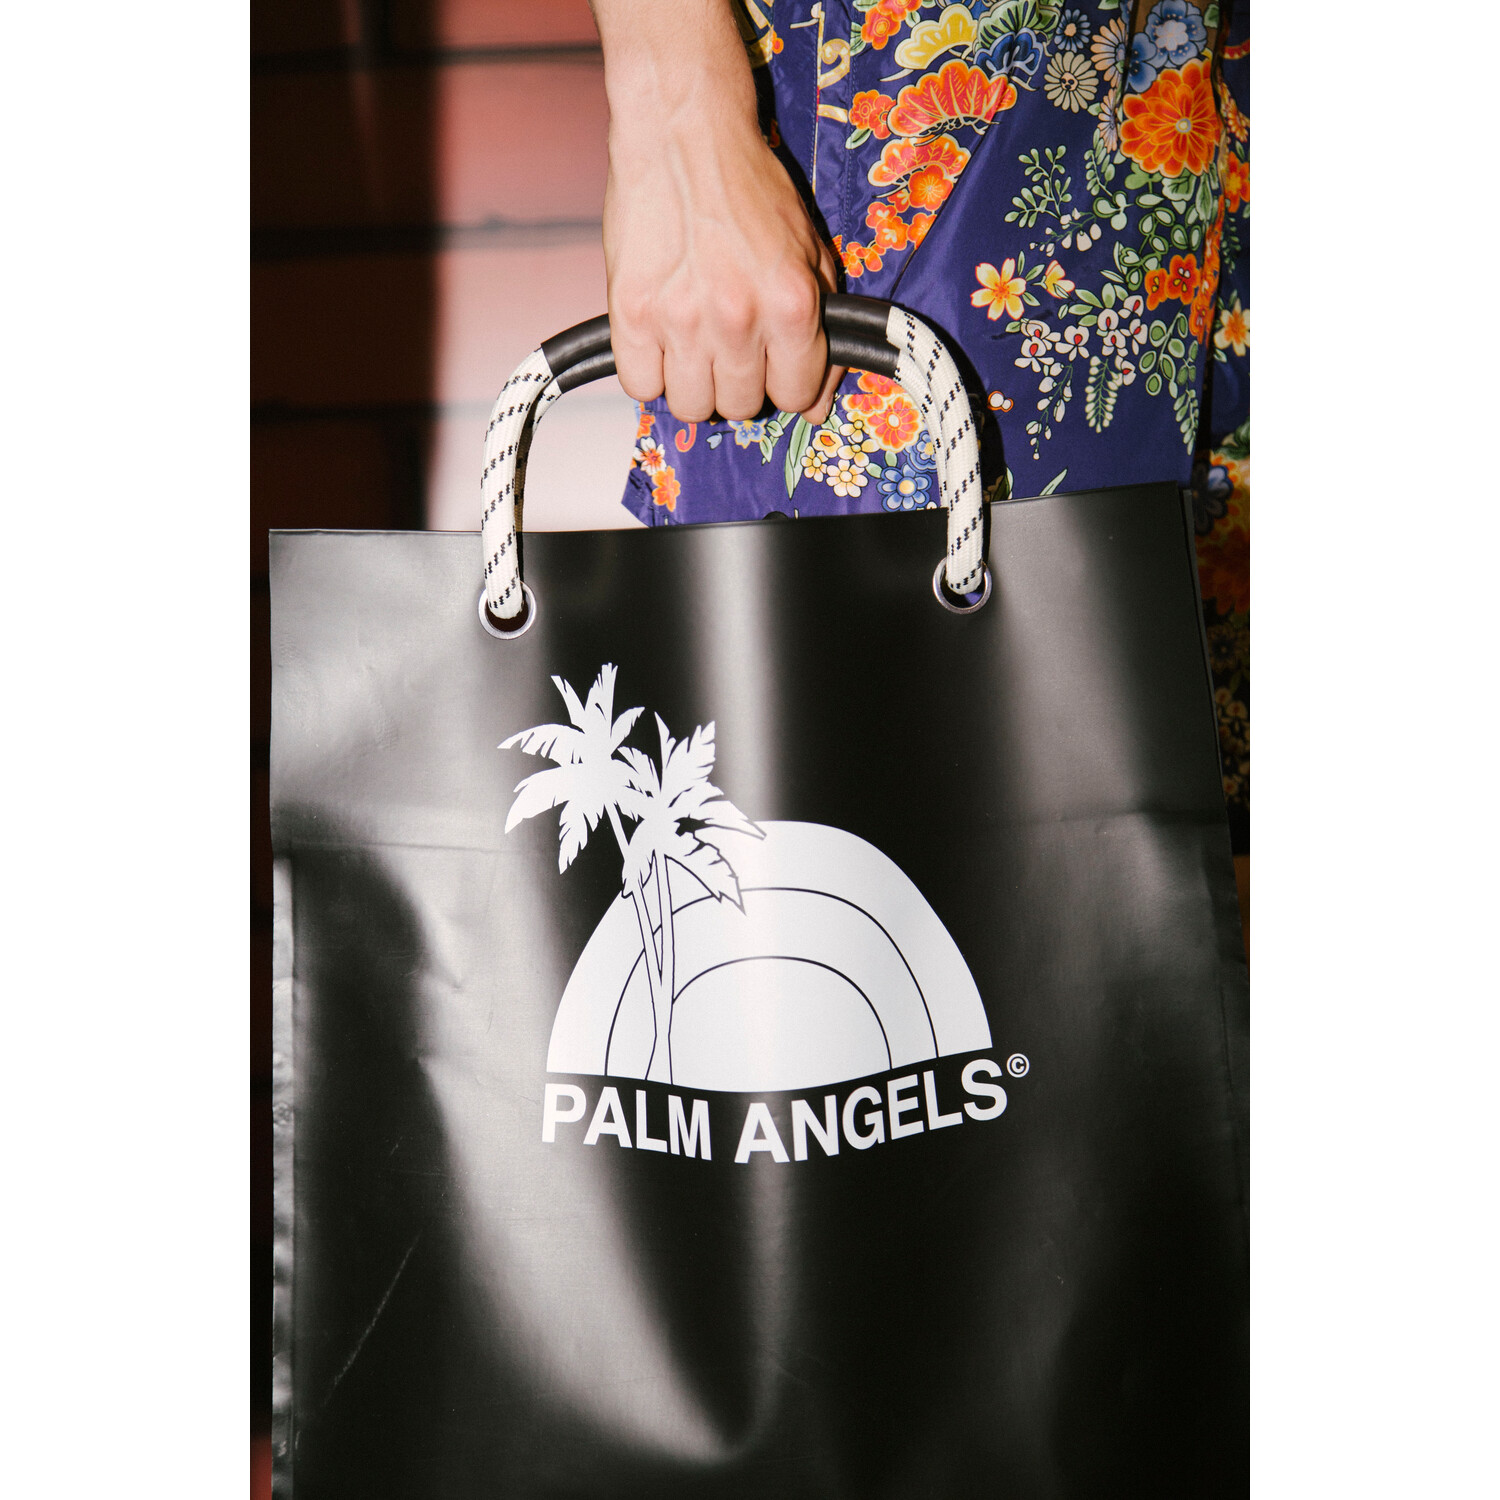 Фото Palm Angels Spring 2020 Menswear Collection / Palm Angels весна- лето 2020 / Неделя моды: Милан